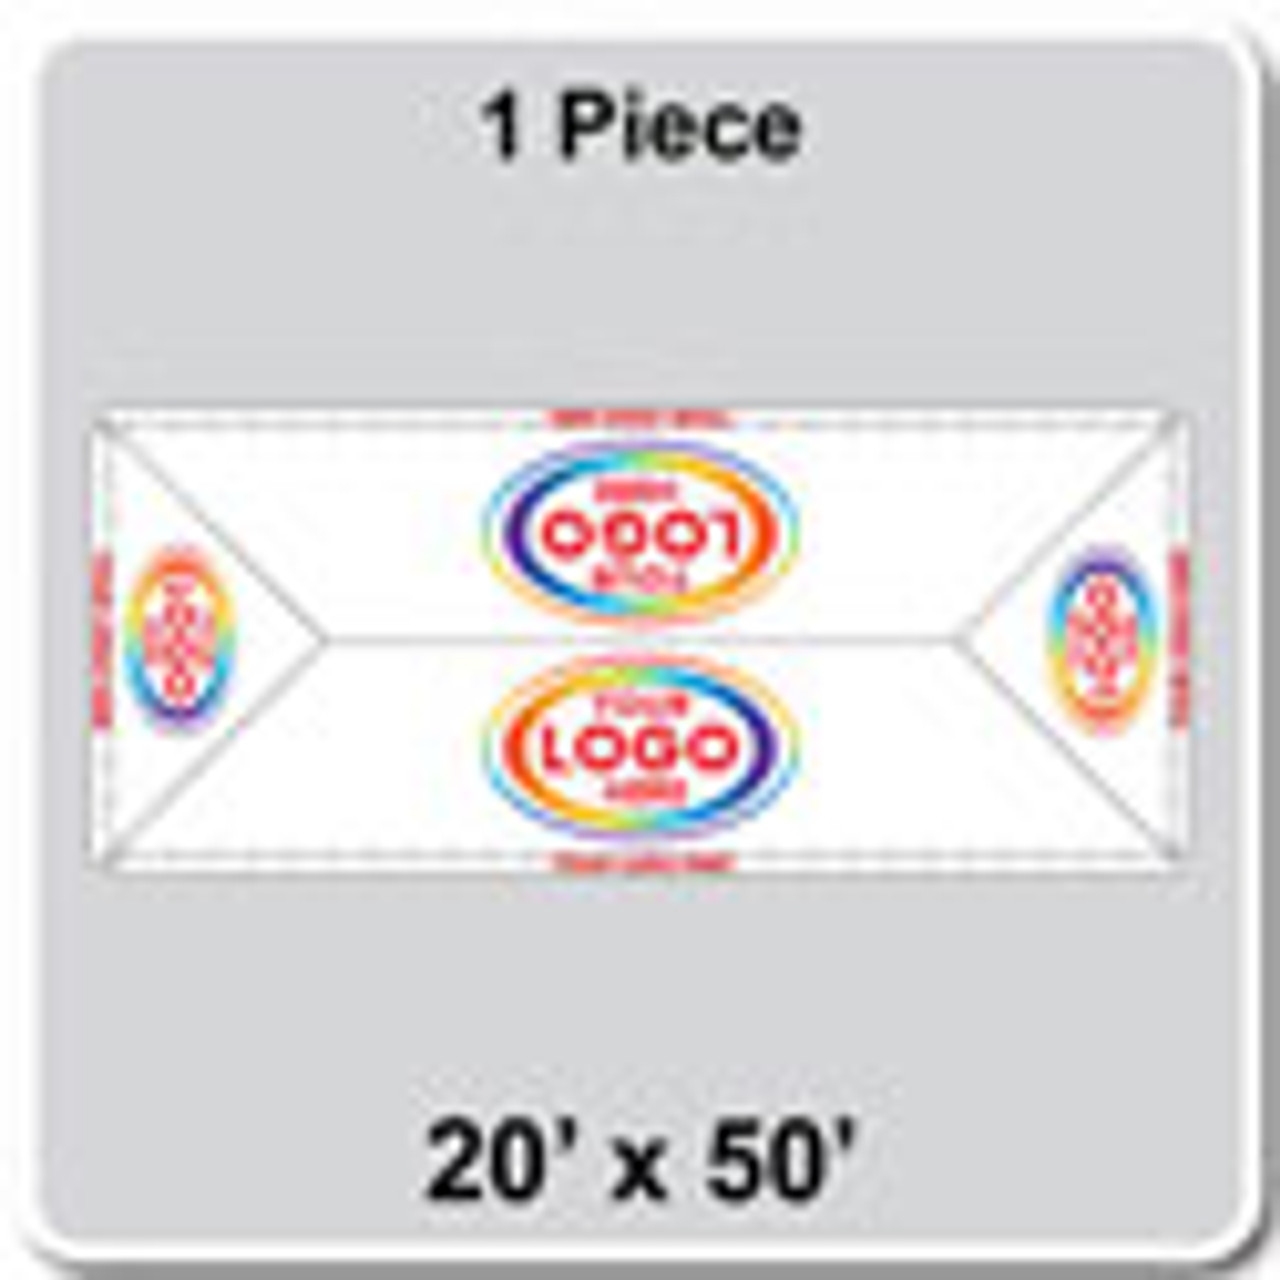 20' x 50' Classic Frame Tent, 1 Piece, 16 oz. Ratchet Top, Logo/Valance Print Only